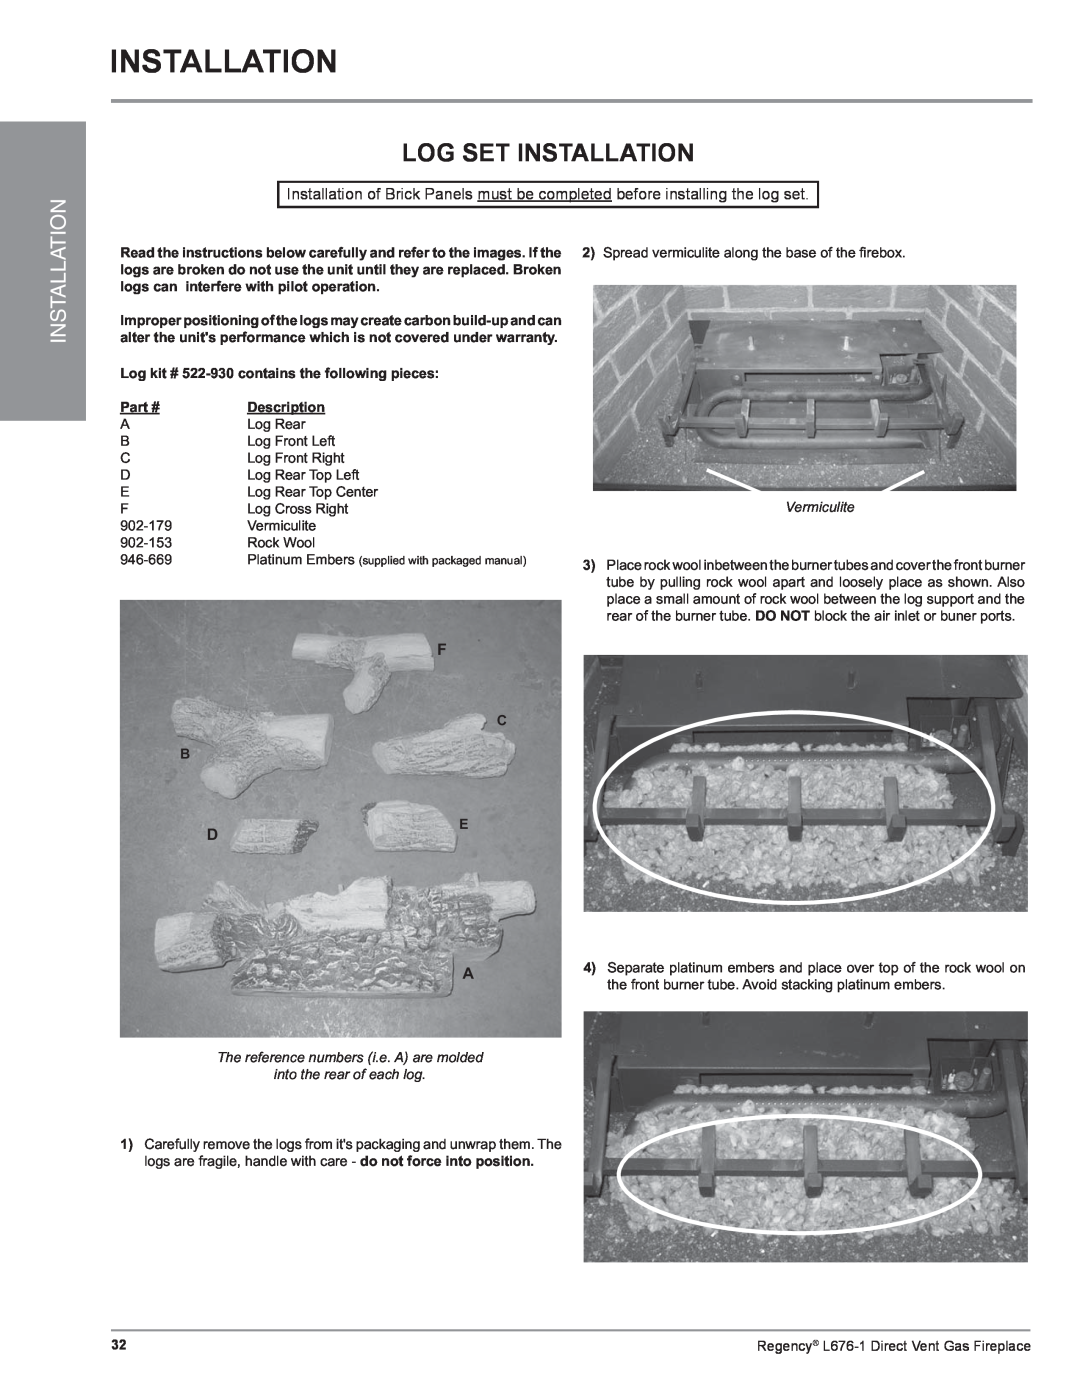 Regency L676-LP1 Log Set Installation, Log kit # 522-930contains the following pieces, Part #, Vermiculite, 902-153 